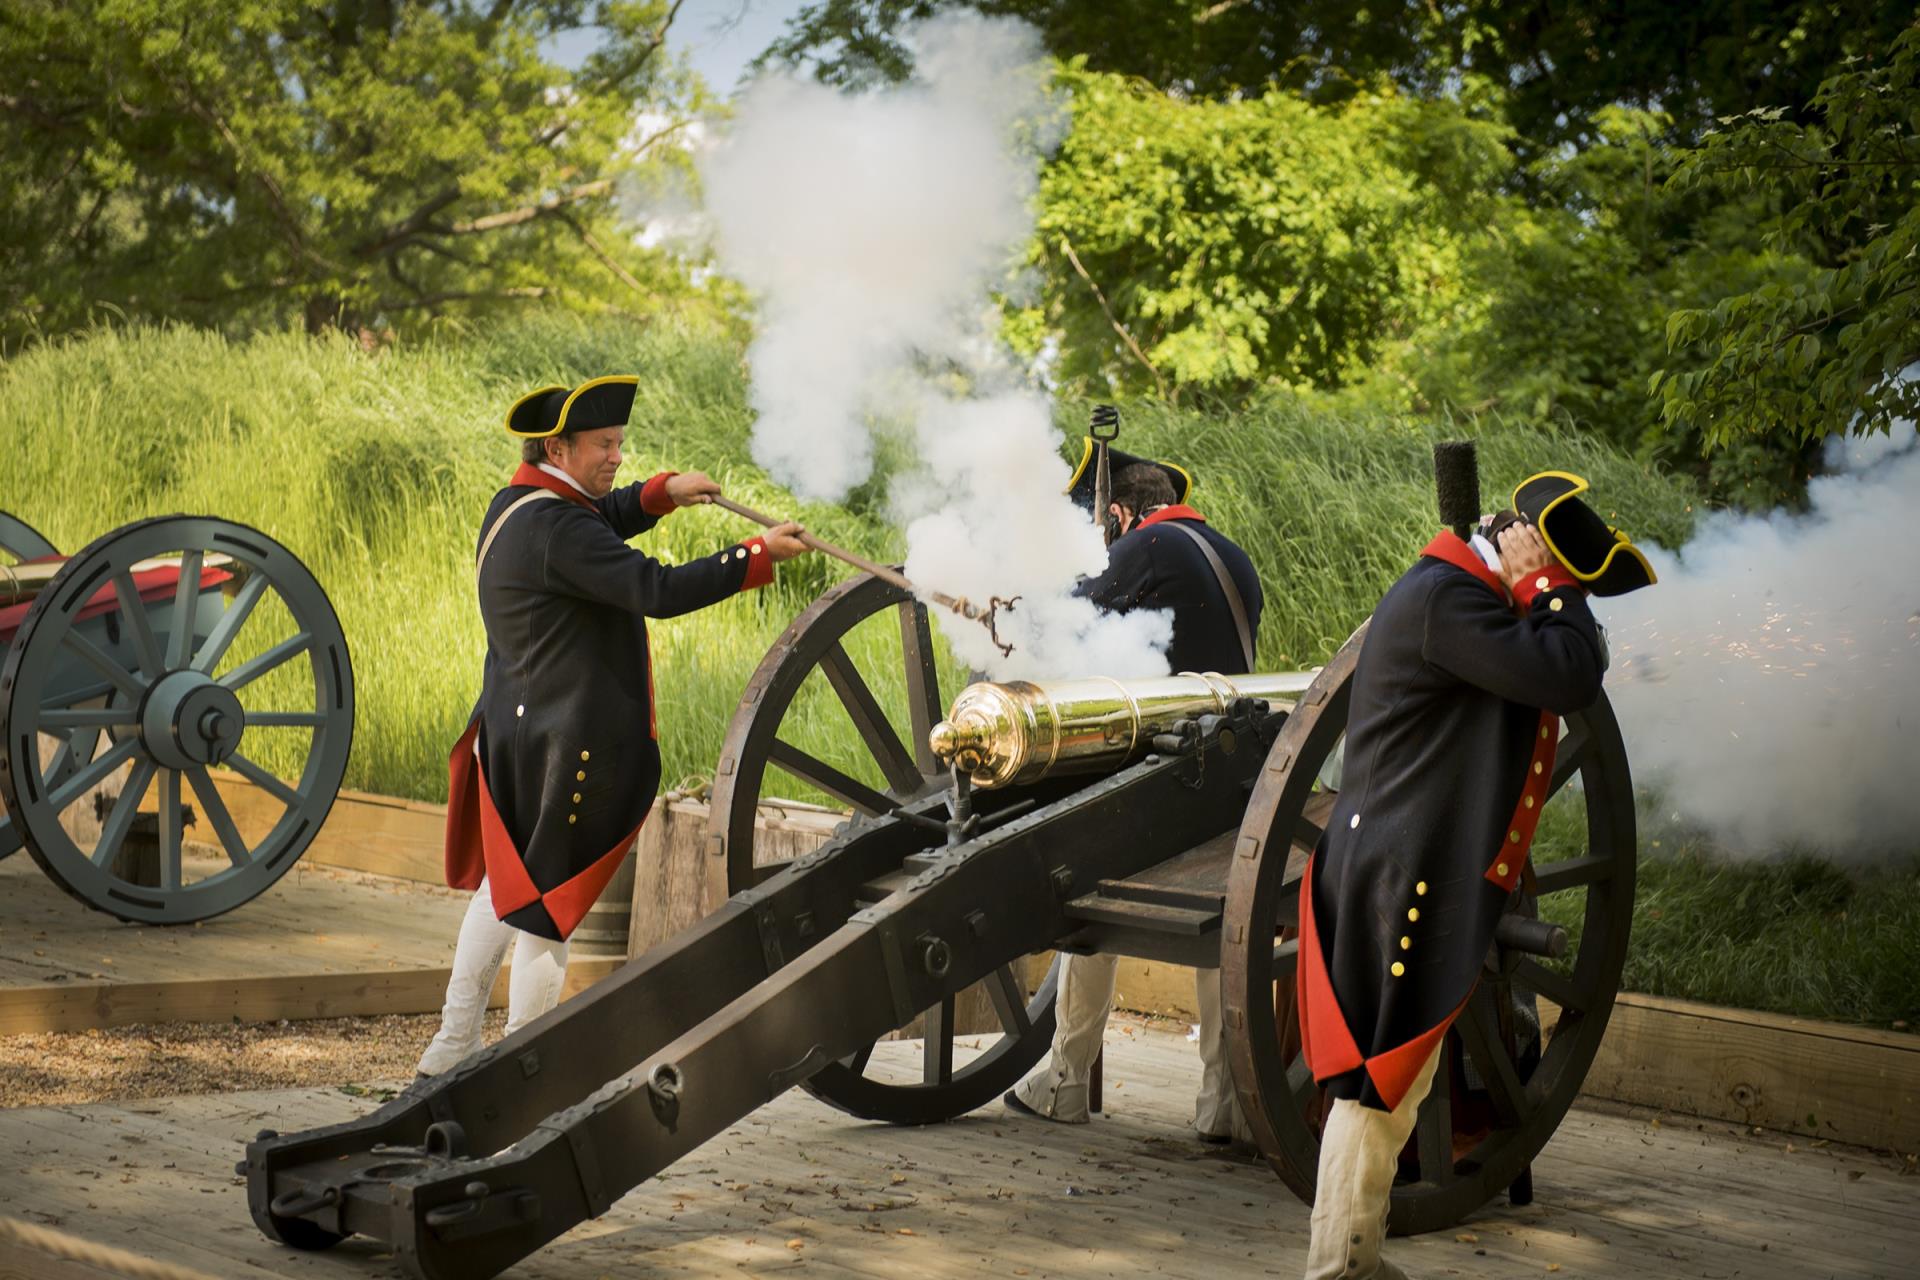 Yorktown Victory Celebration cannon firing